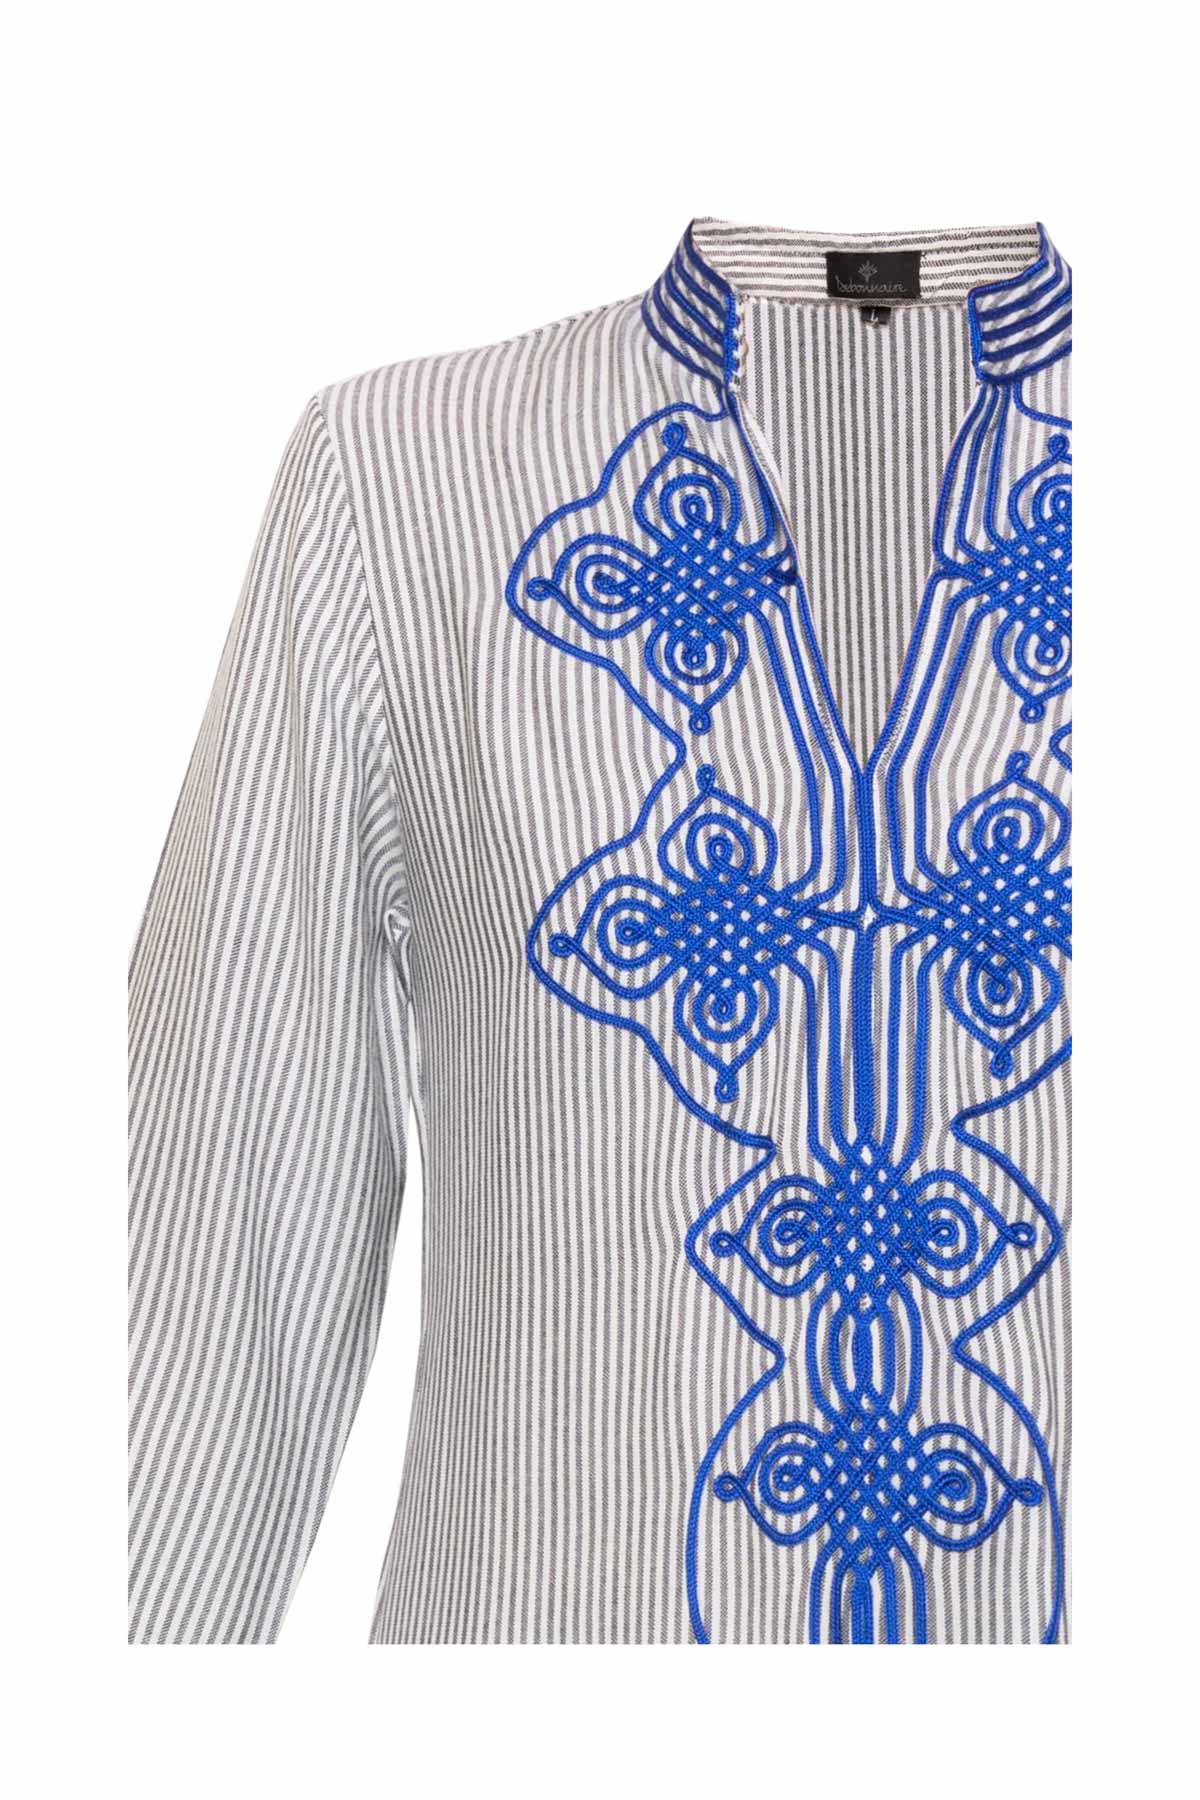 Striped Cotton Kaftan - Royal Blue Embroidery